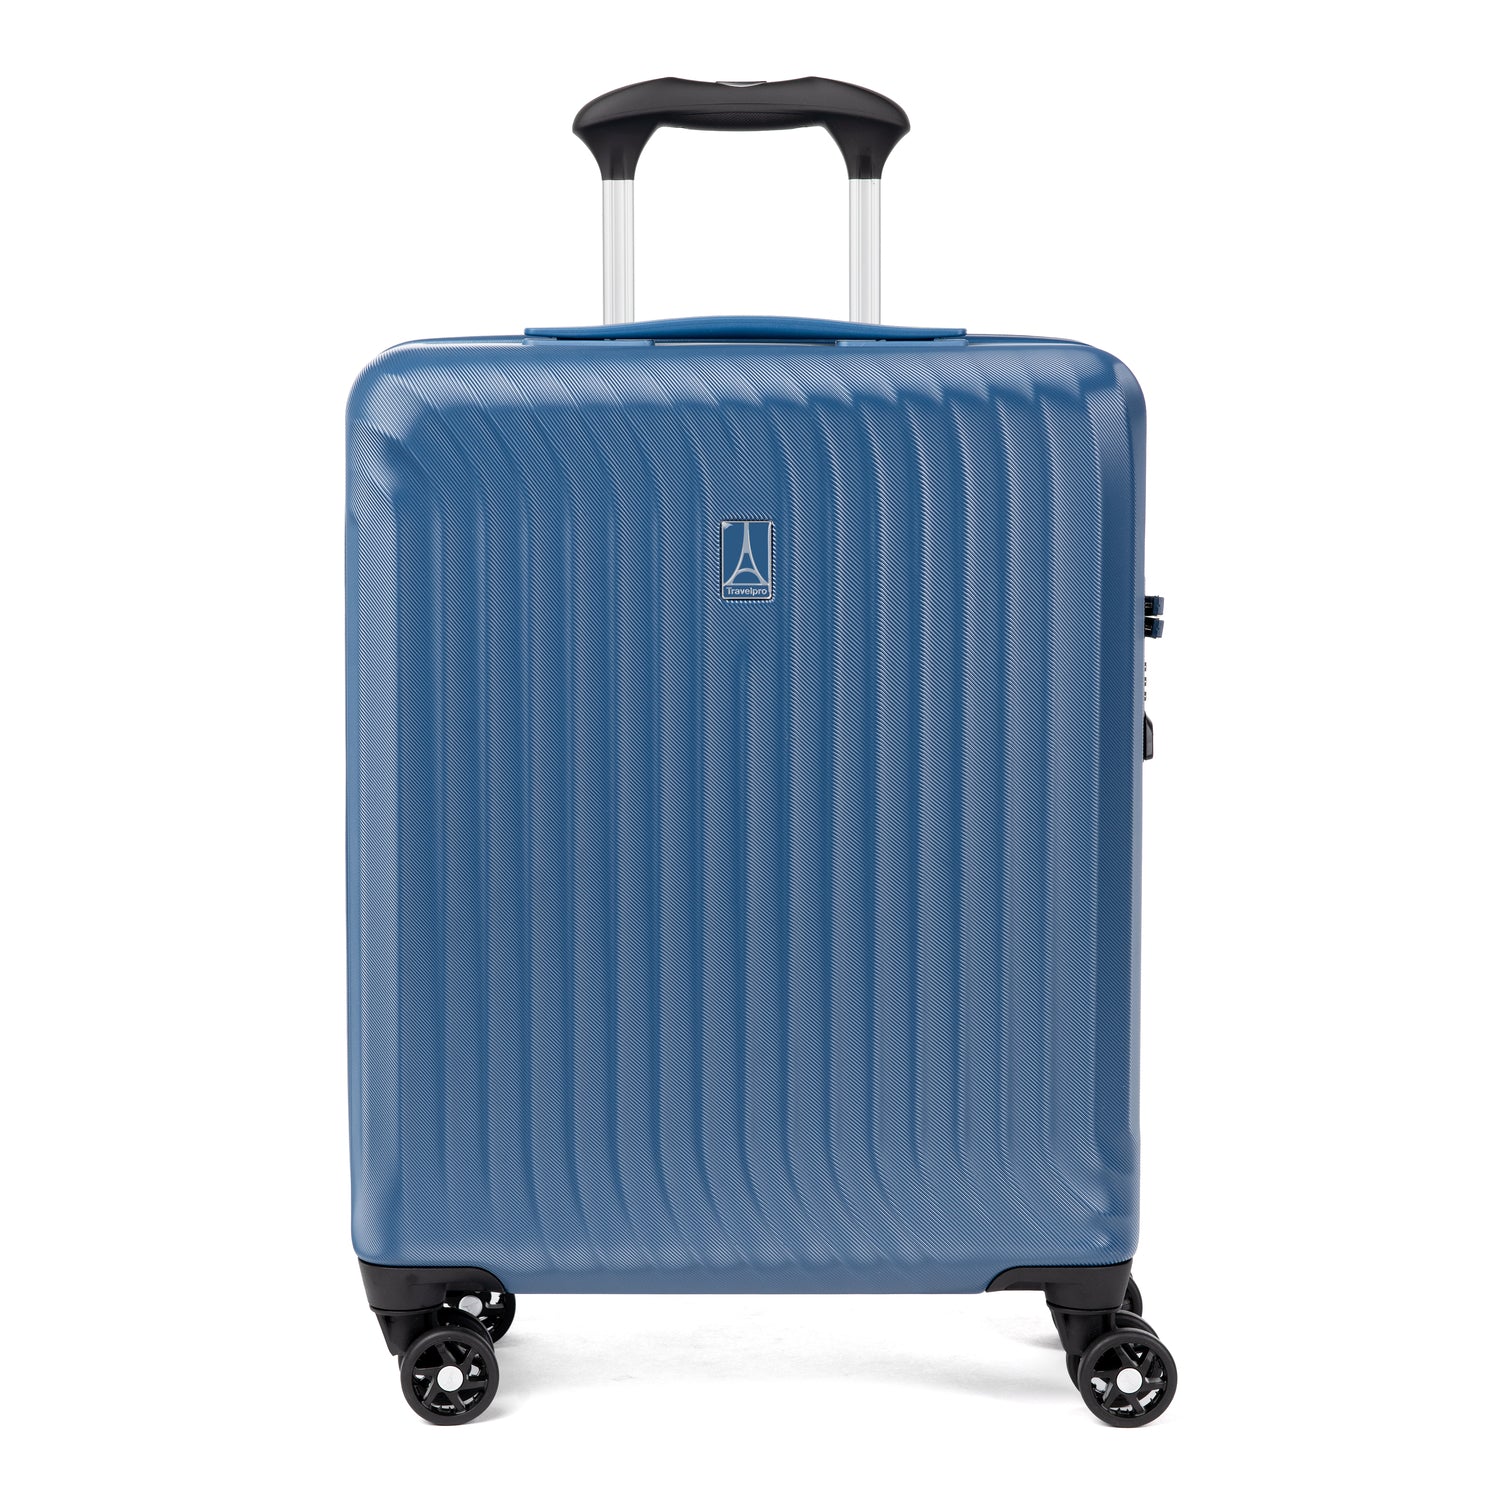 SAS Sized Cabin Luggage | Travelpro Europe – Travelpro® Europe